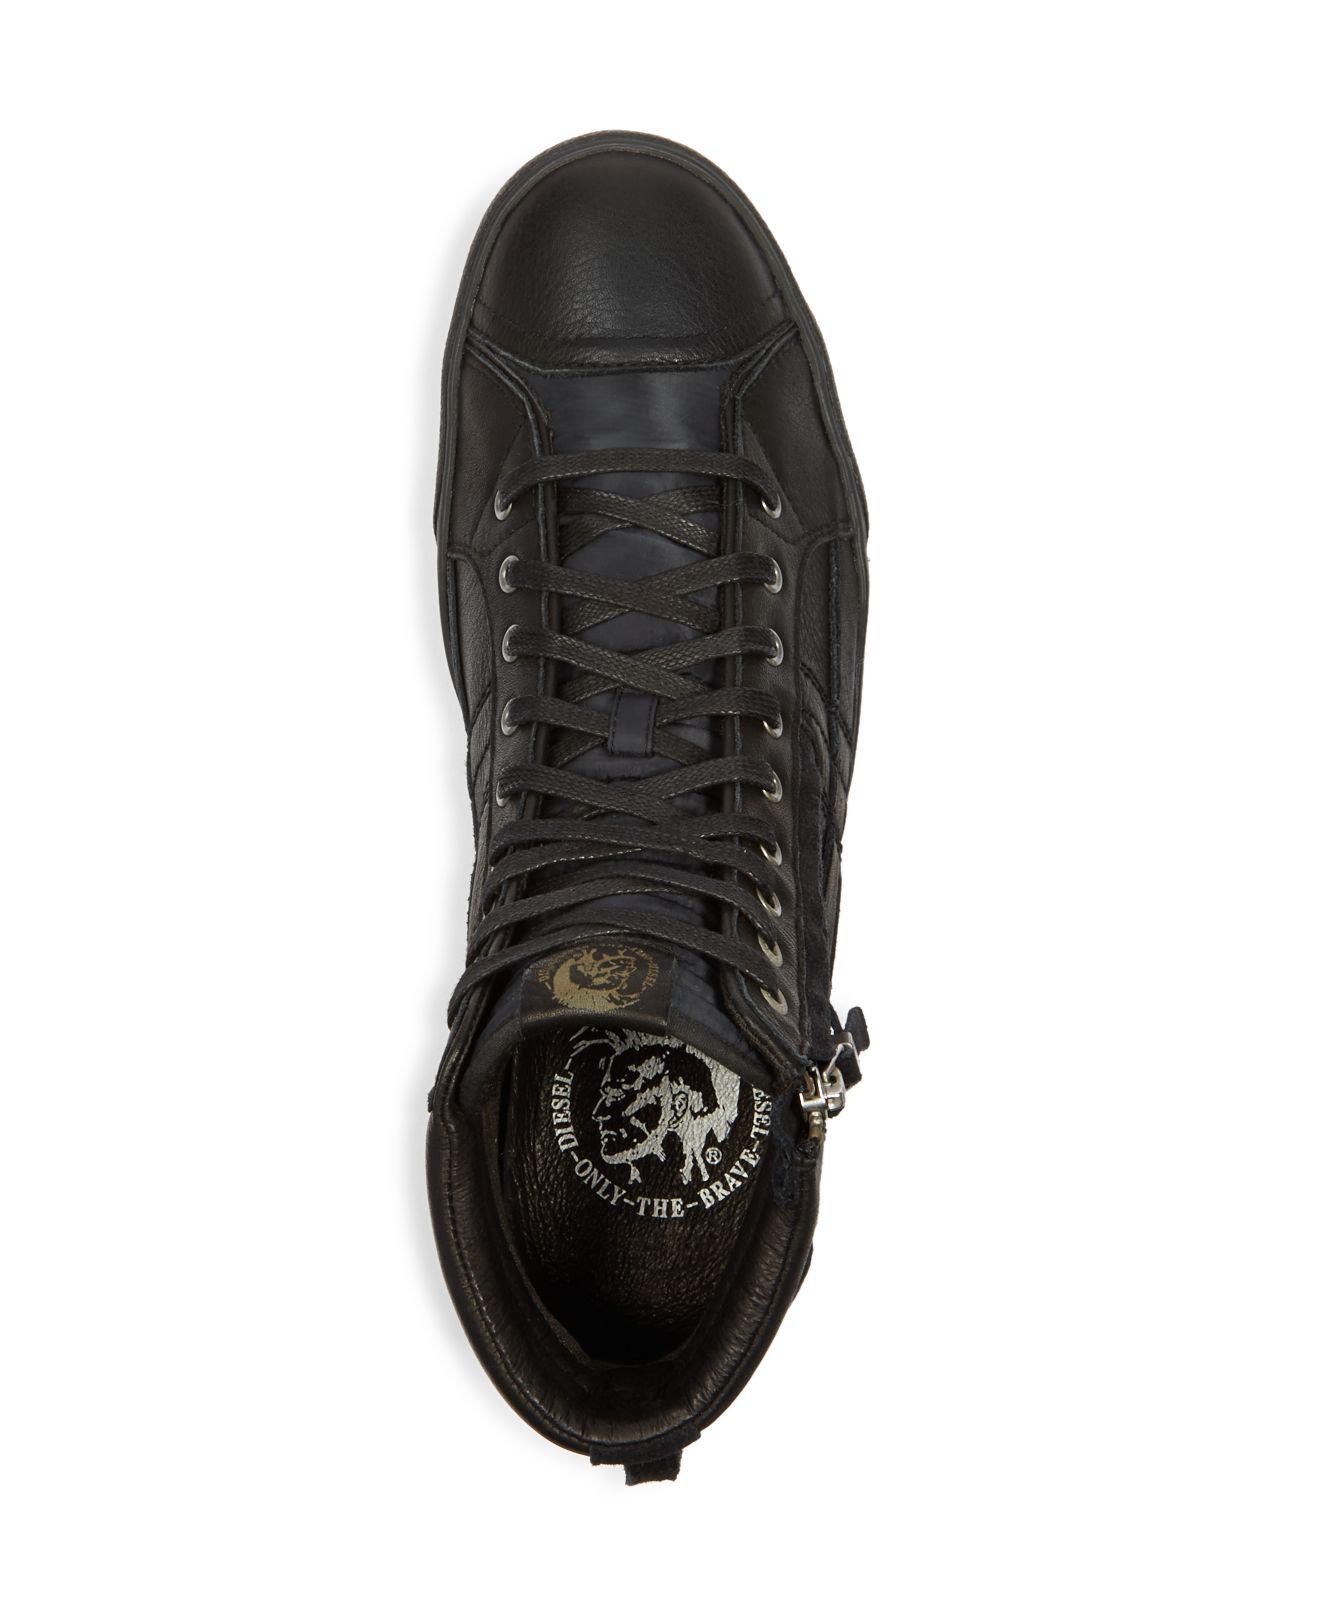 DIESEL D-velows D-string Plus Leather High Top Sneakers in Black for Men -  Lyst